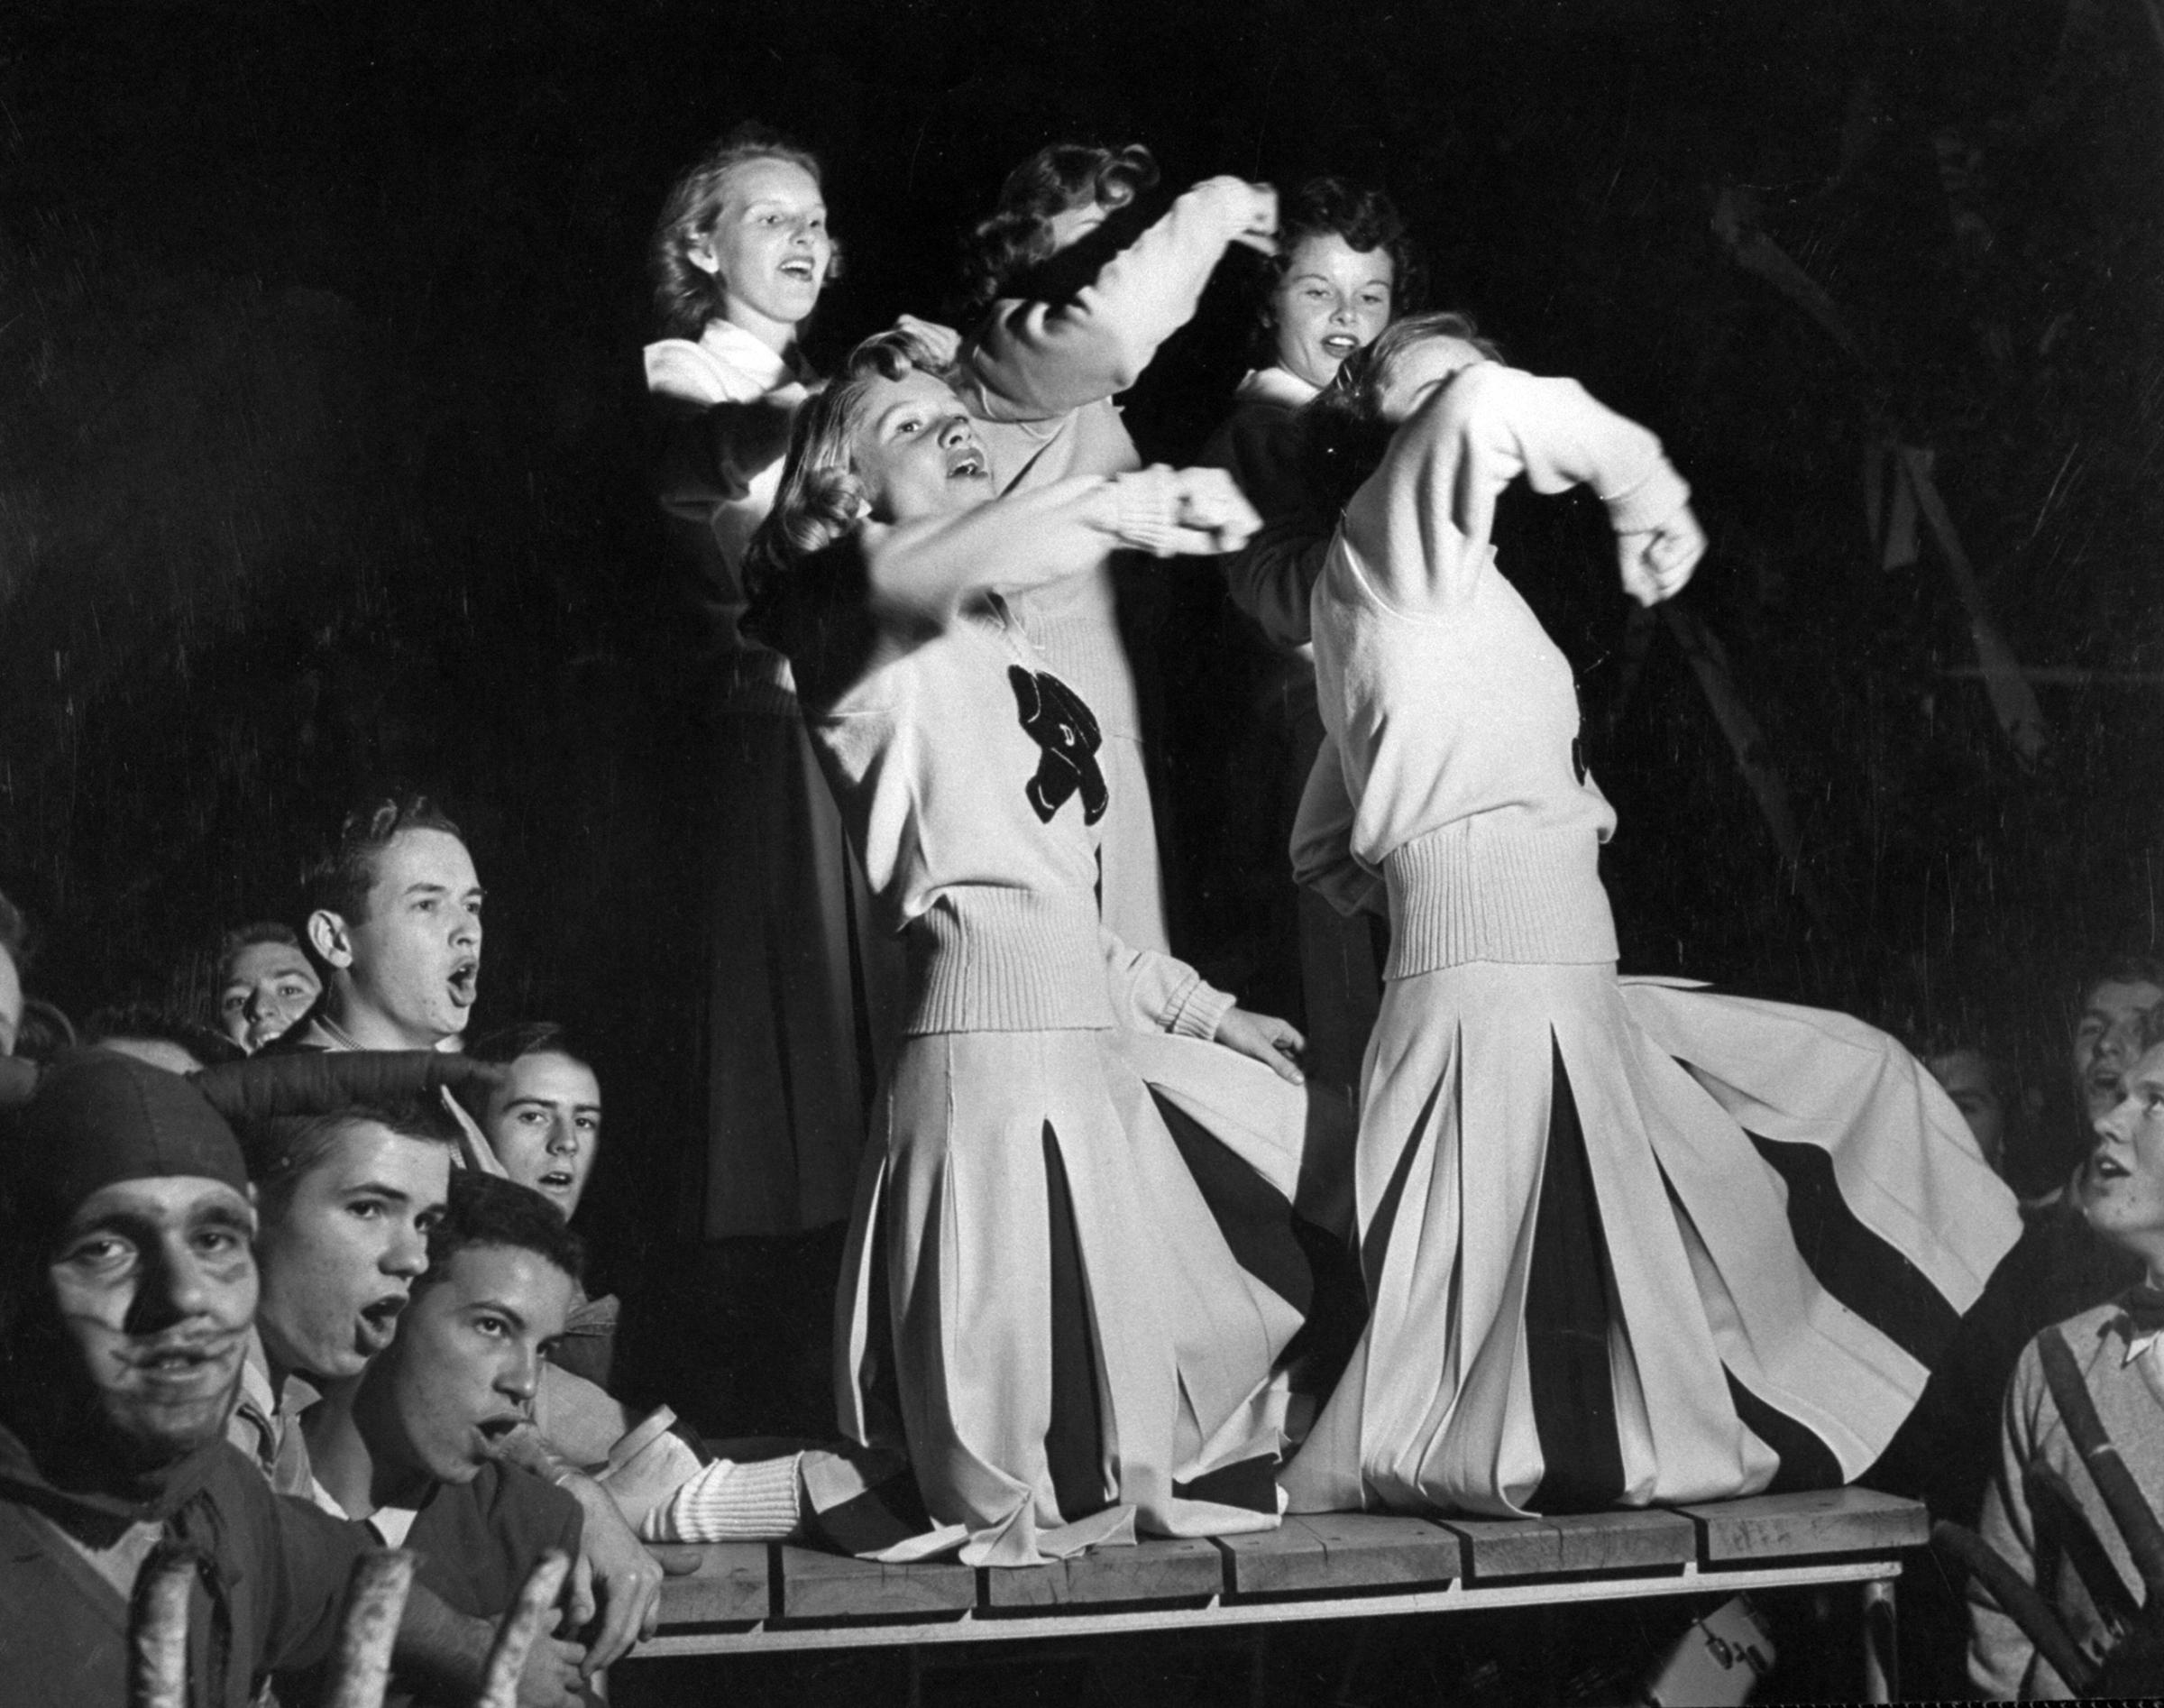 Duke cheerleaders cheering among the fans in the bleachers, 1952.